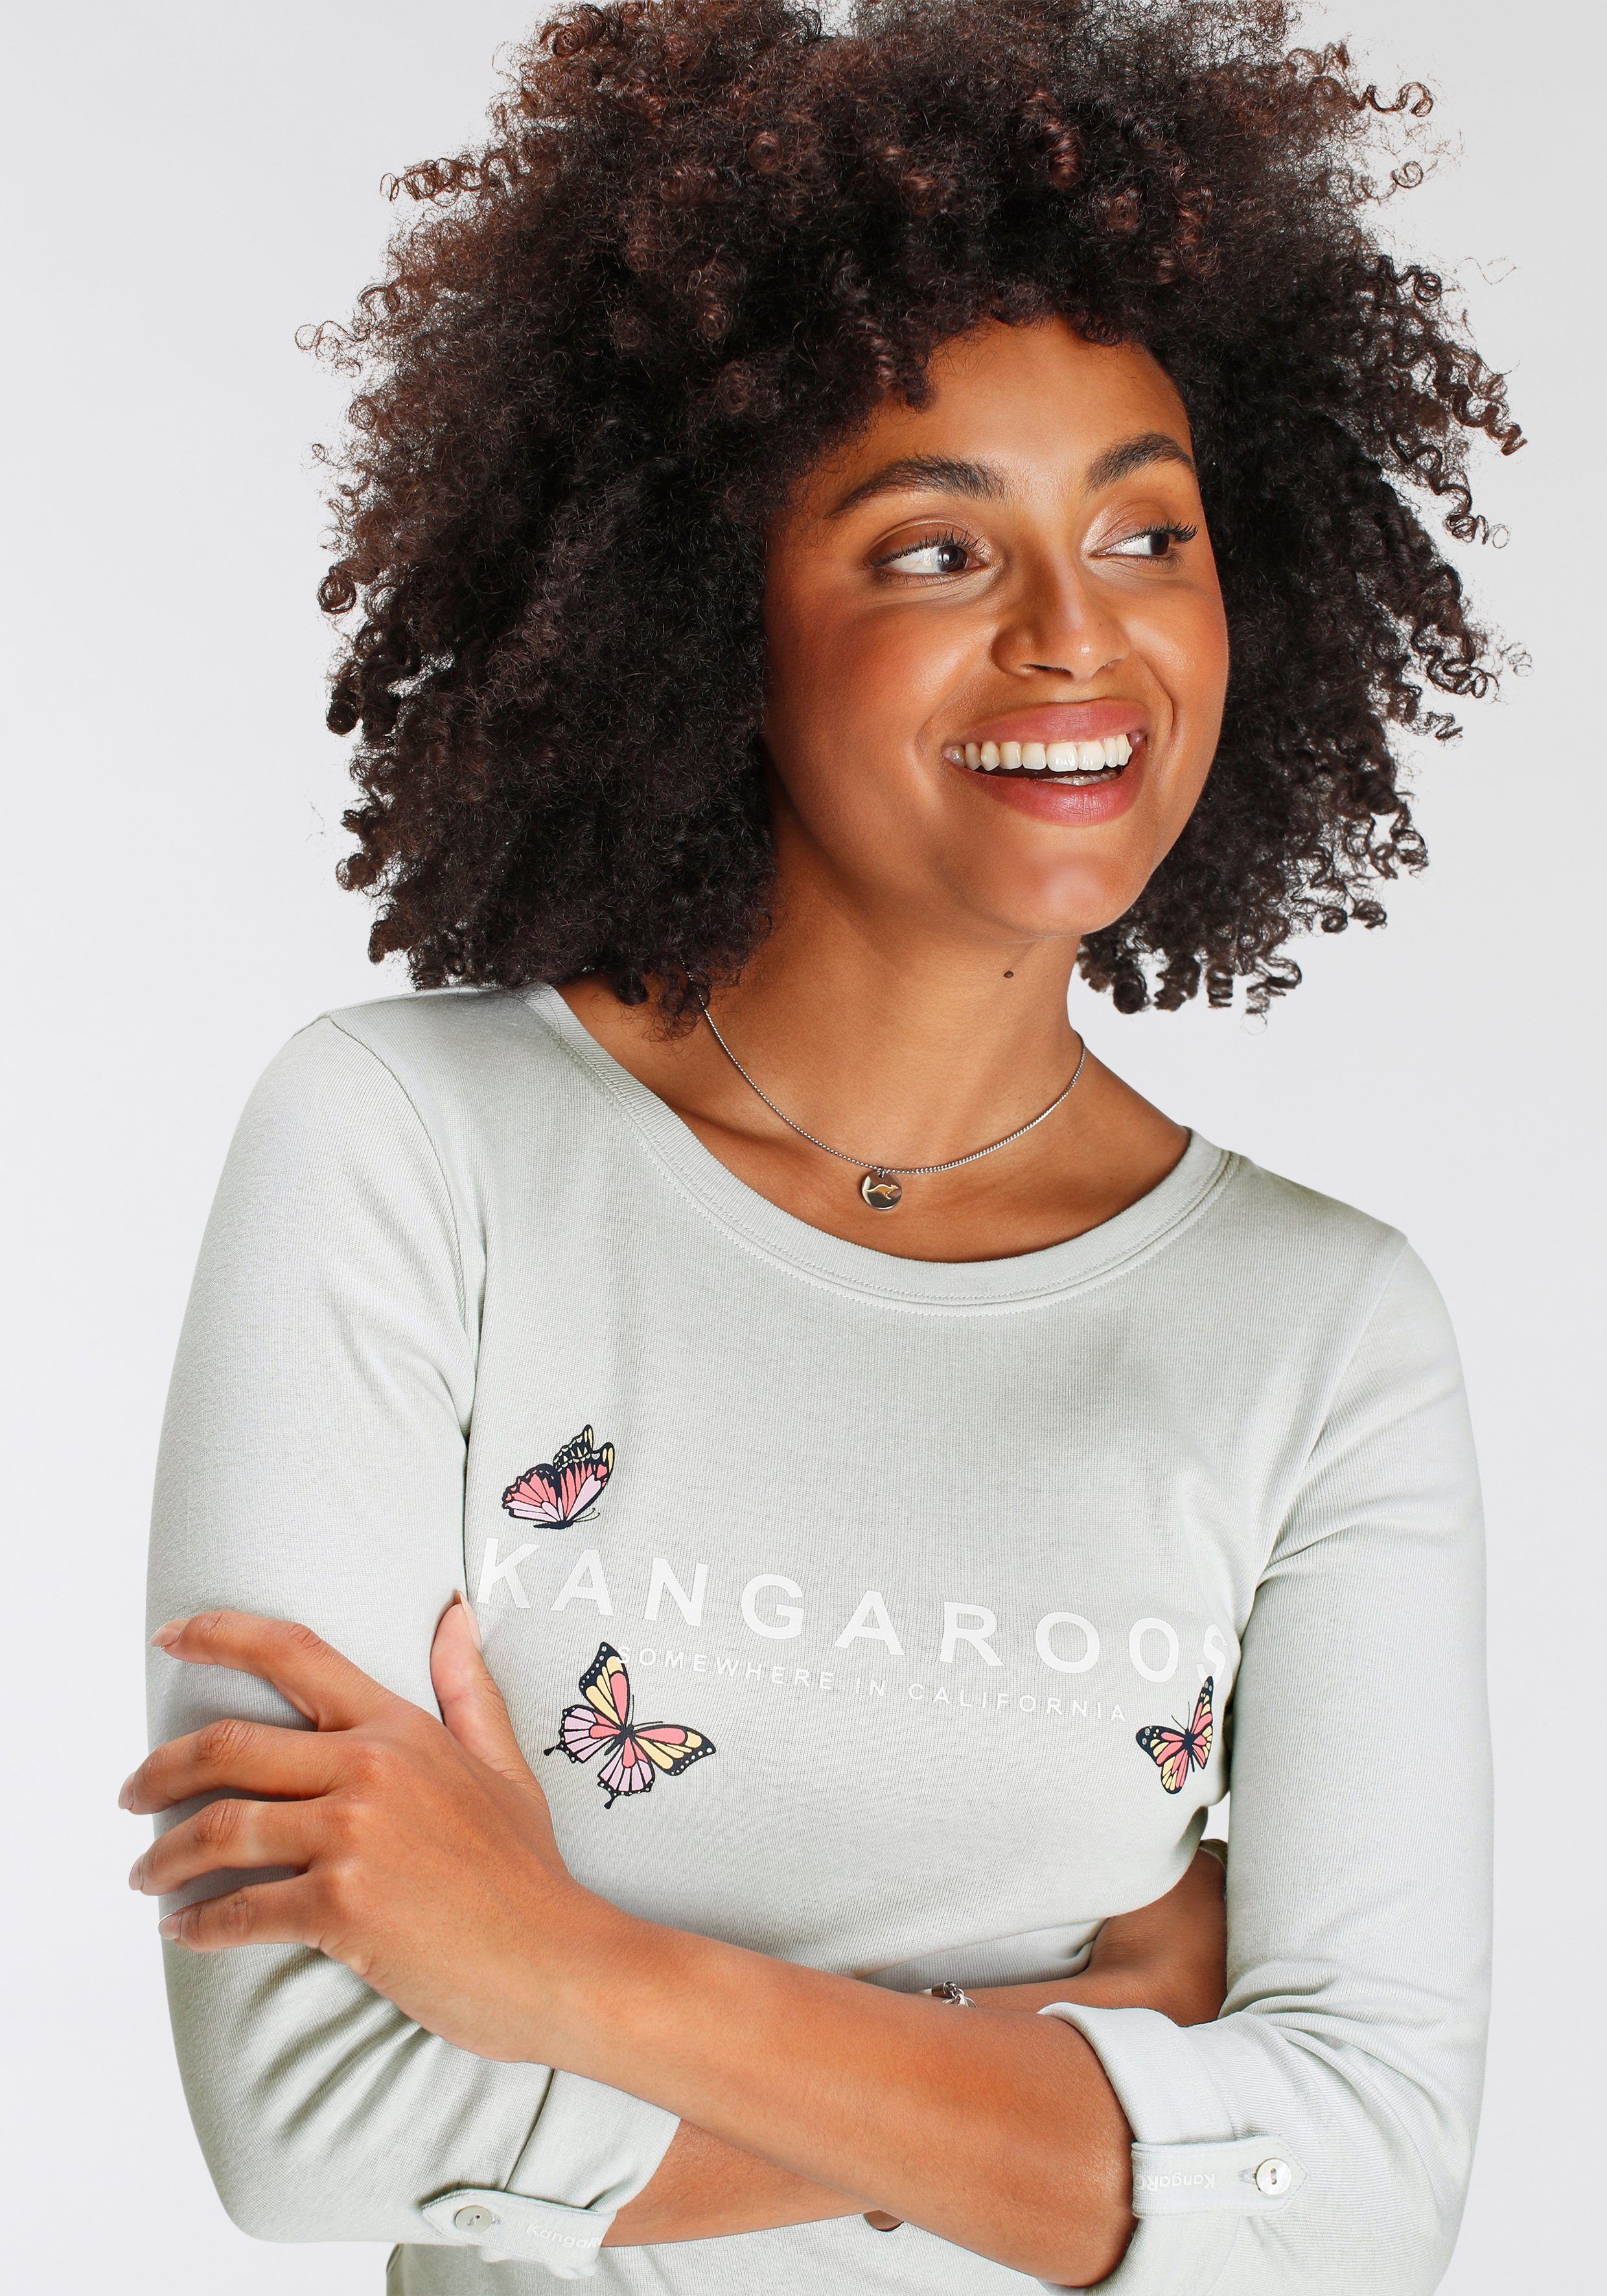 KangaROOS Langarmshirt mit süßem NEUE zum & - krempeln Logodruck Ärmeln KOLLEKTION